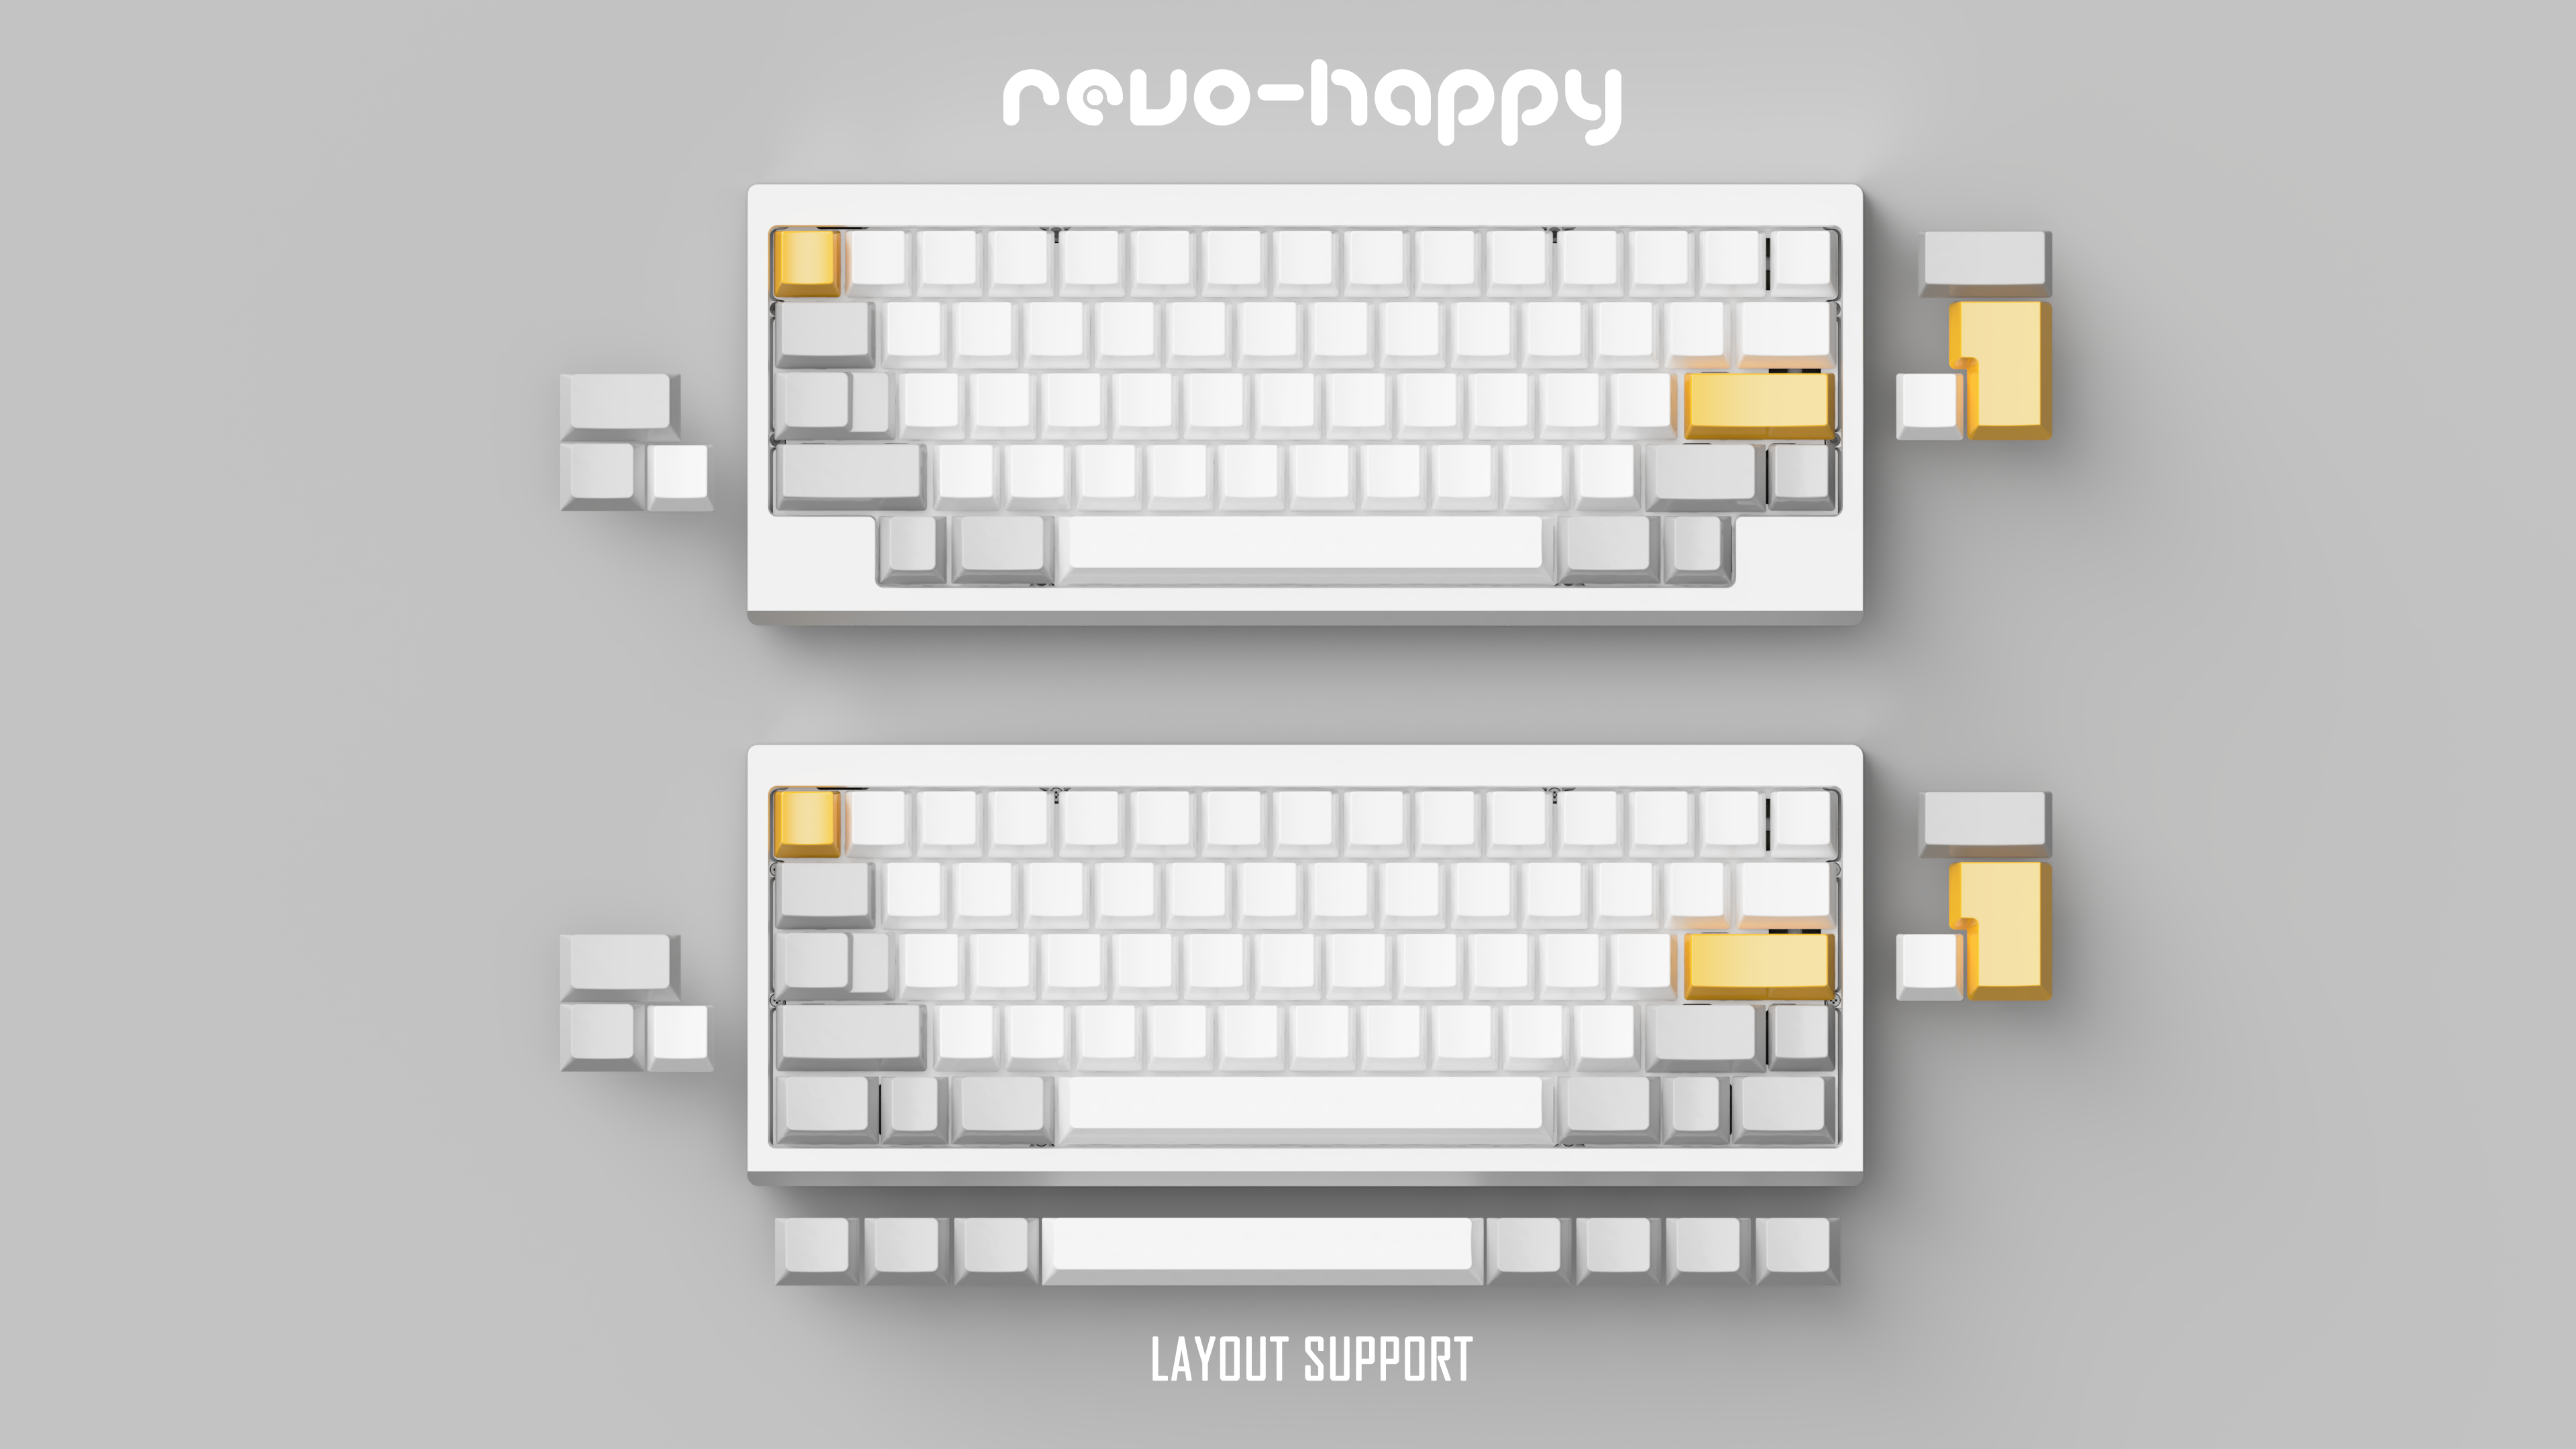 【ZD】客制化机械键盘 Cary Works Revo-happy 60% hhkb双模套件-图0